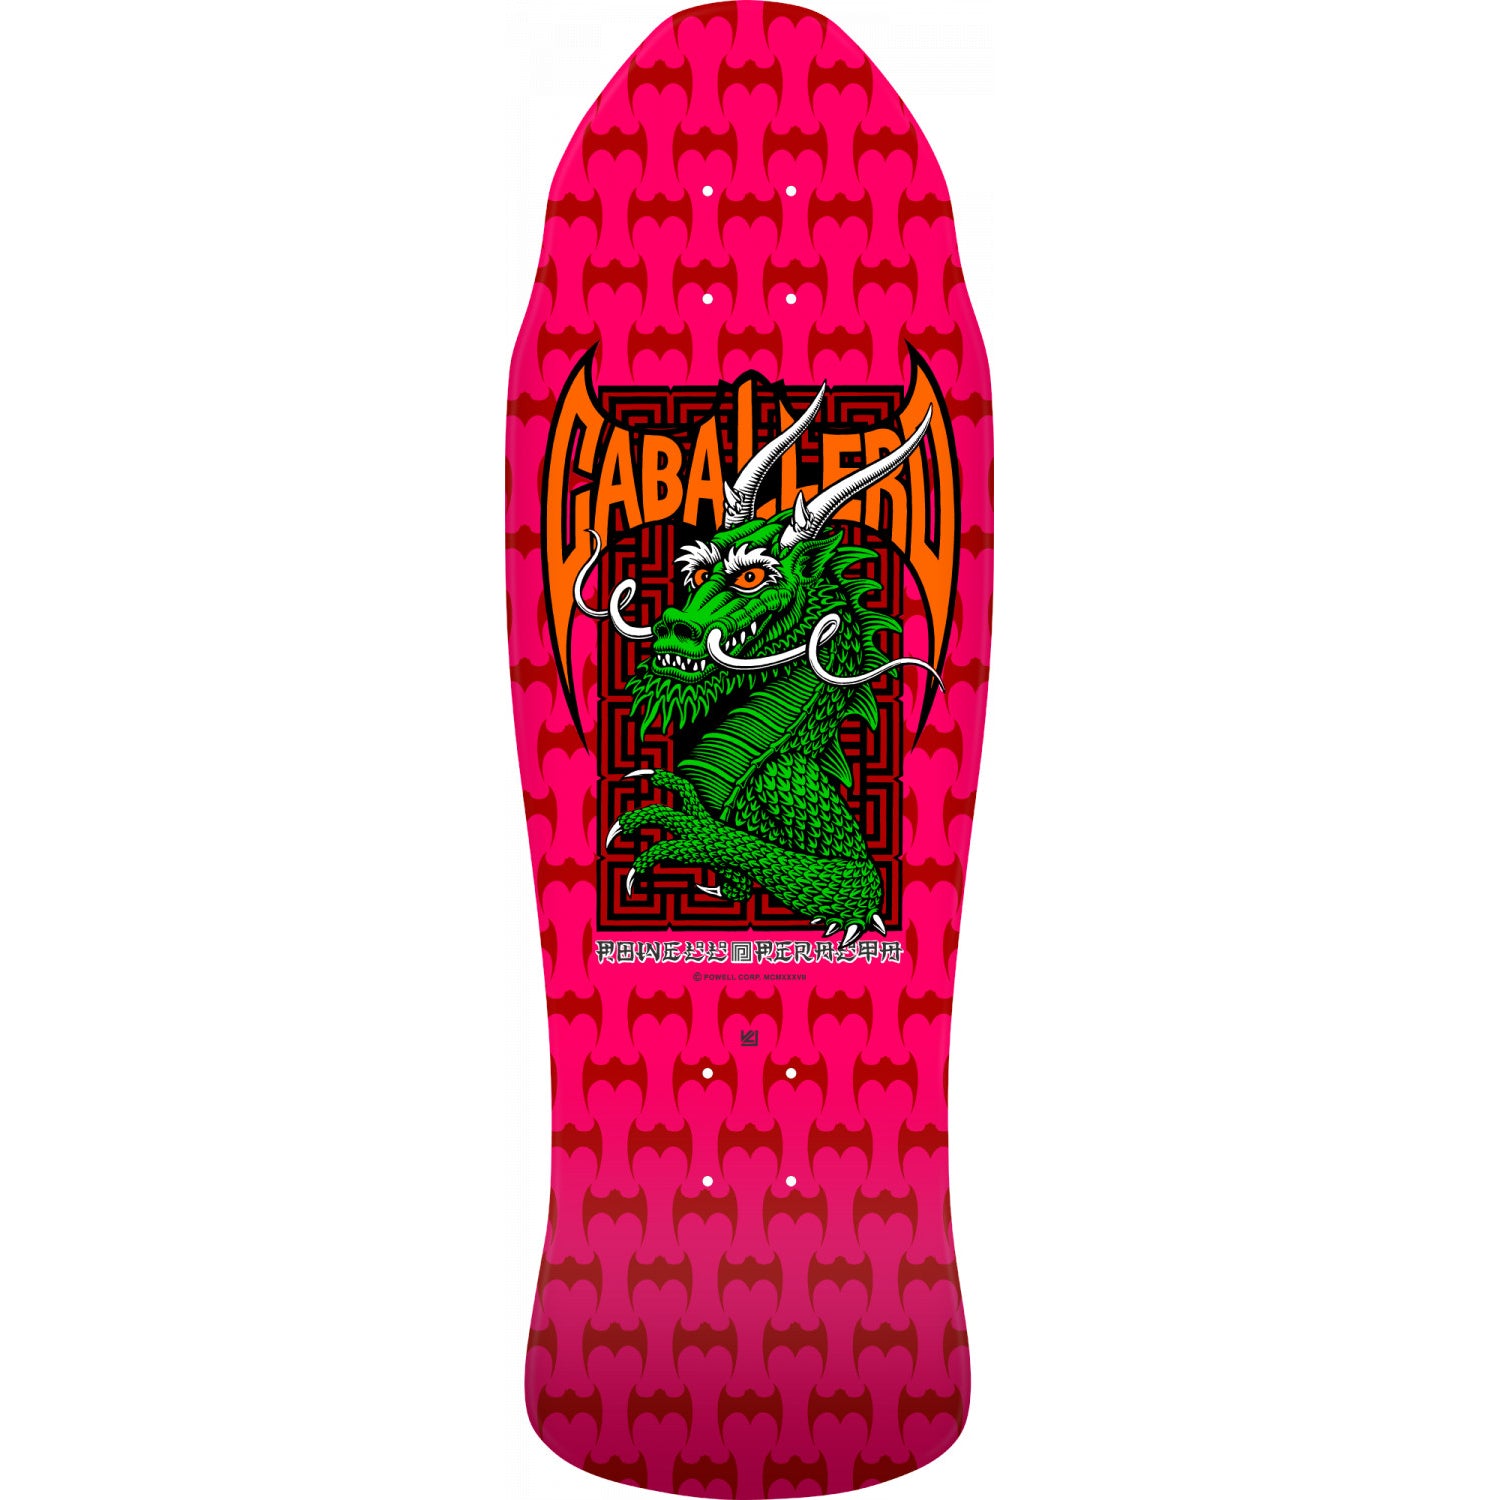 Hot Pink Reissue Steve Caballero Street Powell Peralta Skateboard Deck